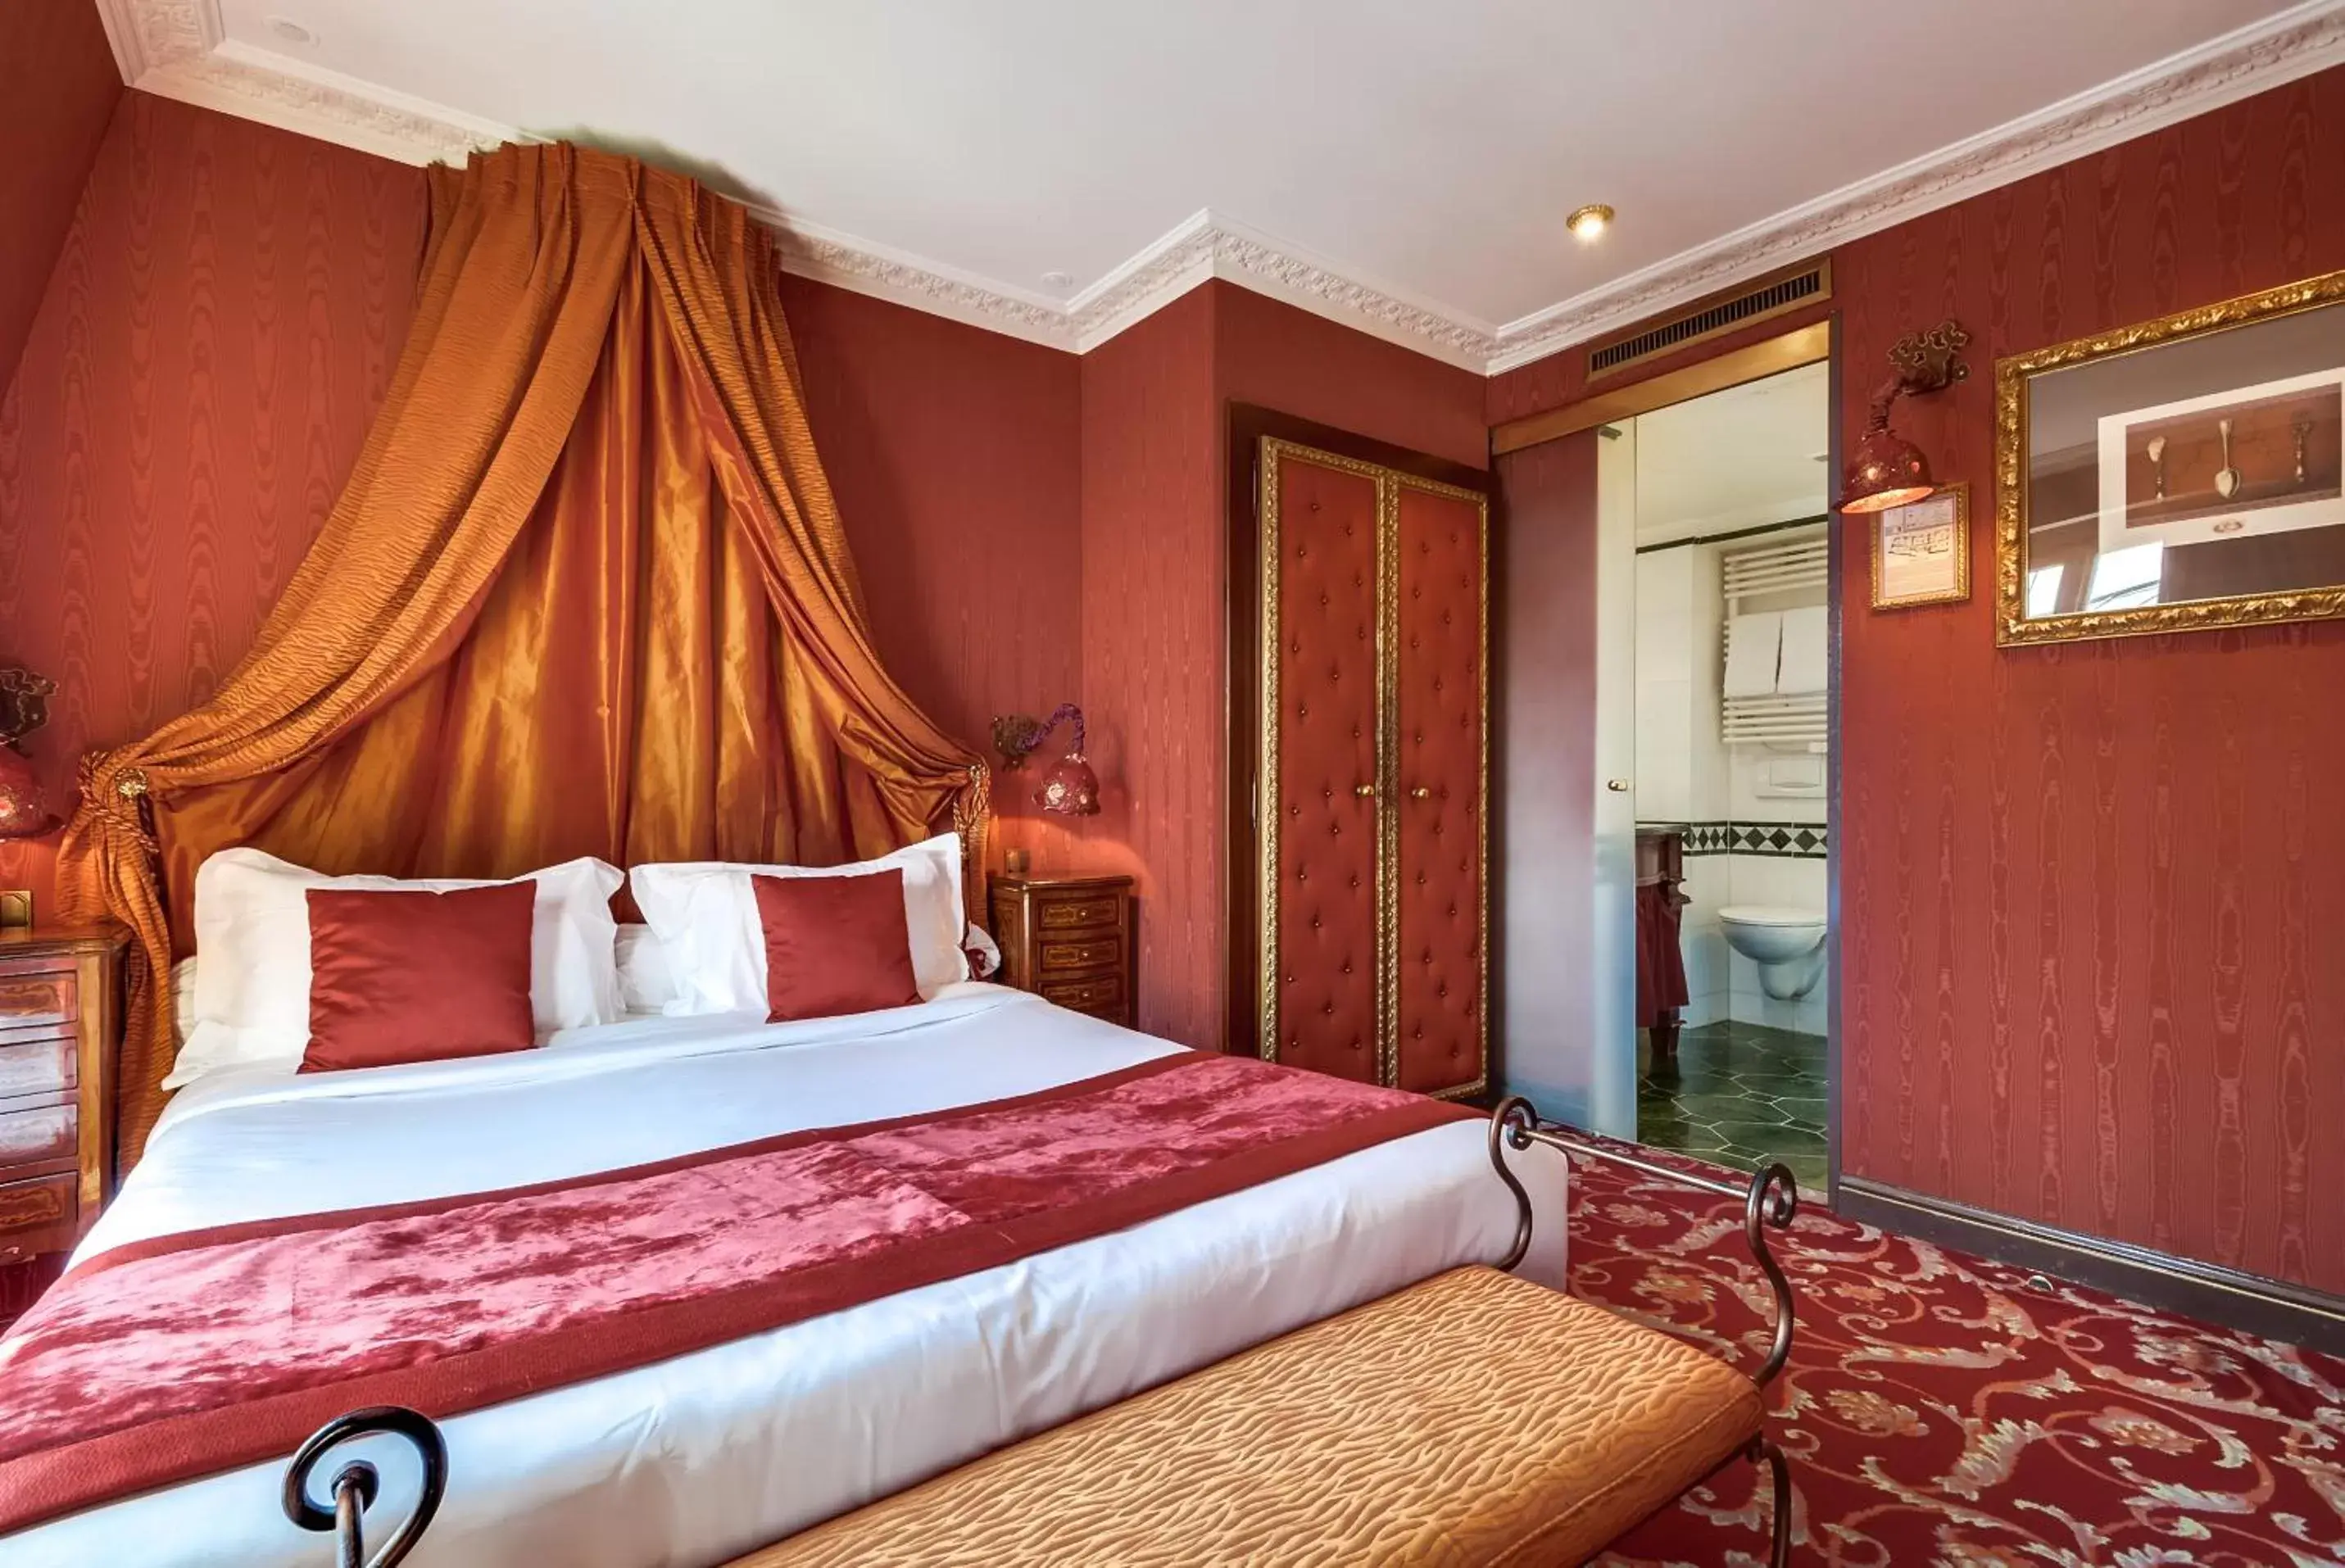 Bed, Room Photo in Villa Royale